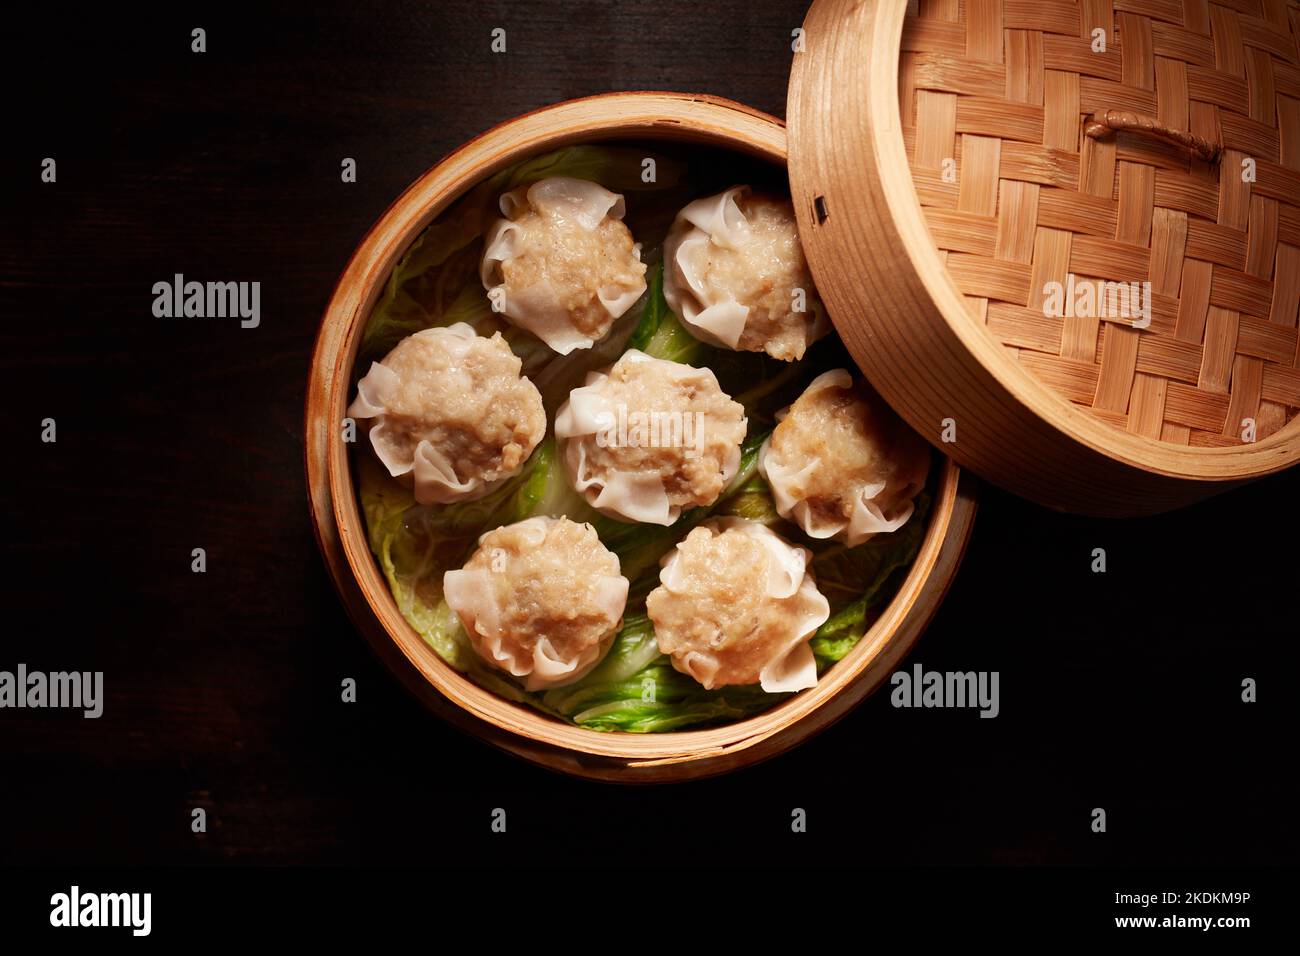 Chinese style dumplings Stock Photo